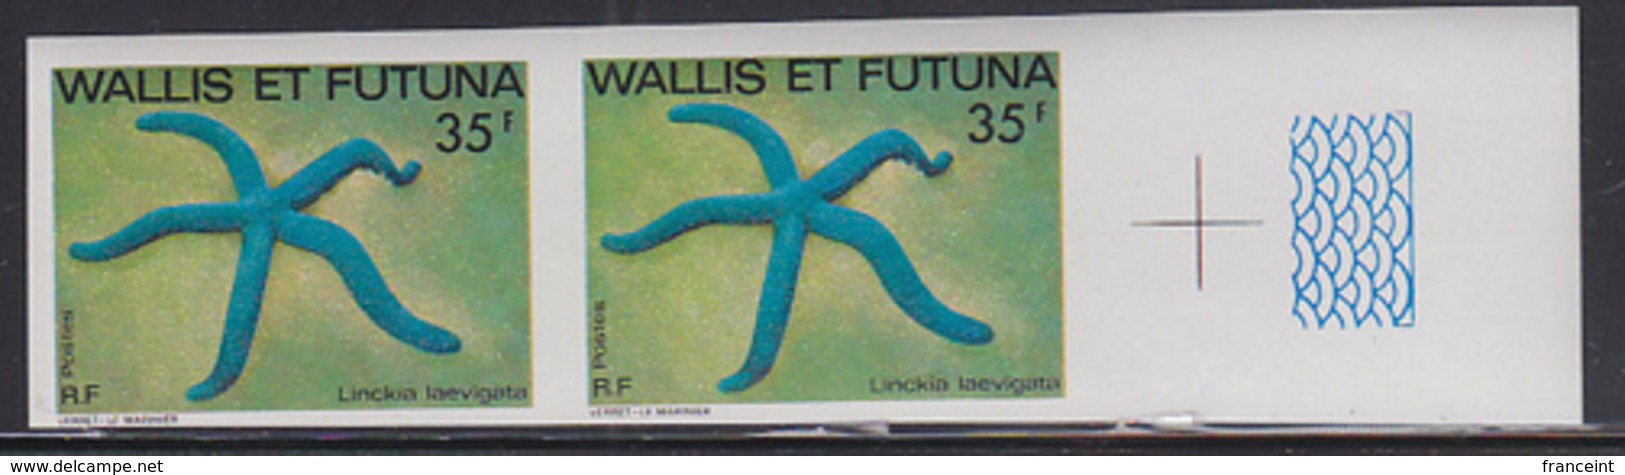 WALLIS & FUTUNA (1982) Blue Star (Linckia Laevigata). Imperforate Pair. Scott No 295, Yvert No 298. - Imperforates, Proofs & Errors